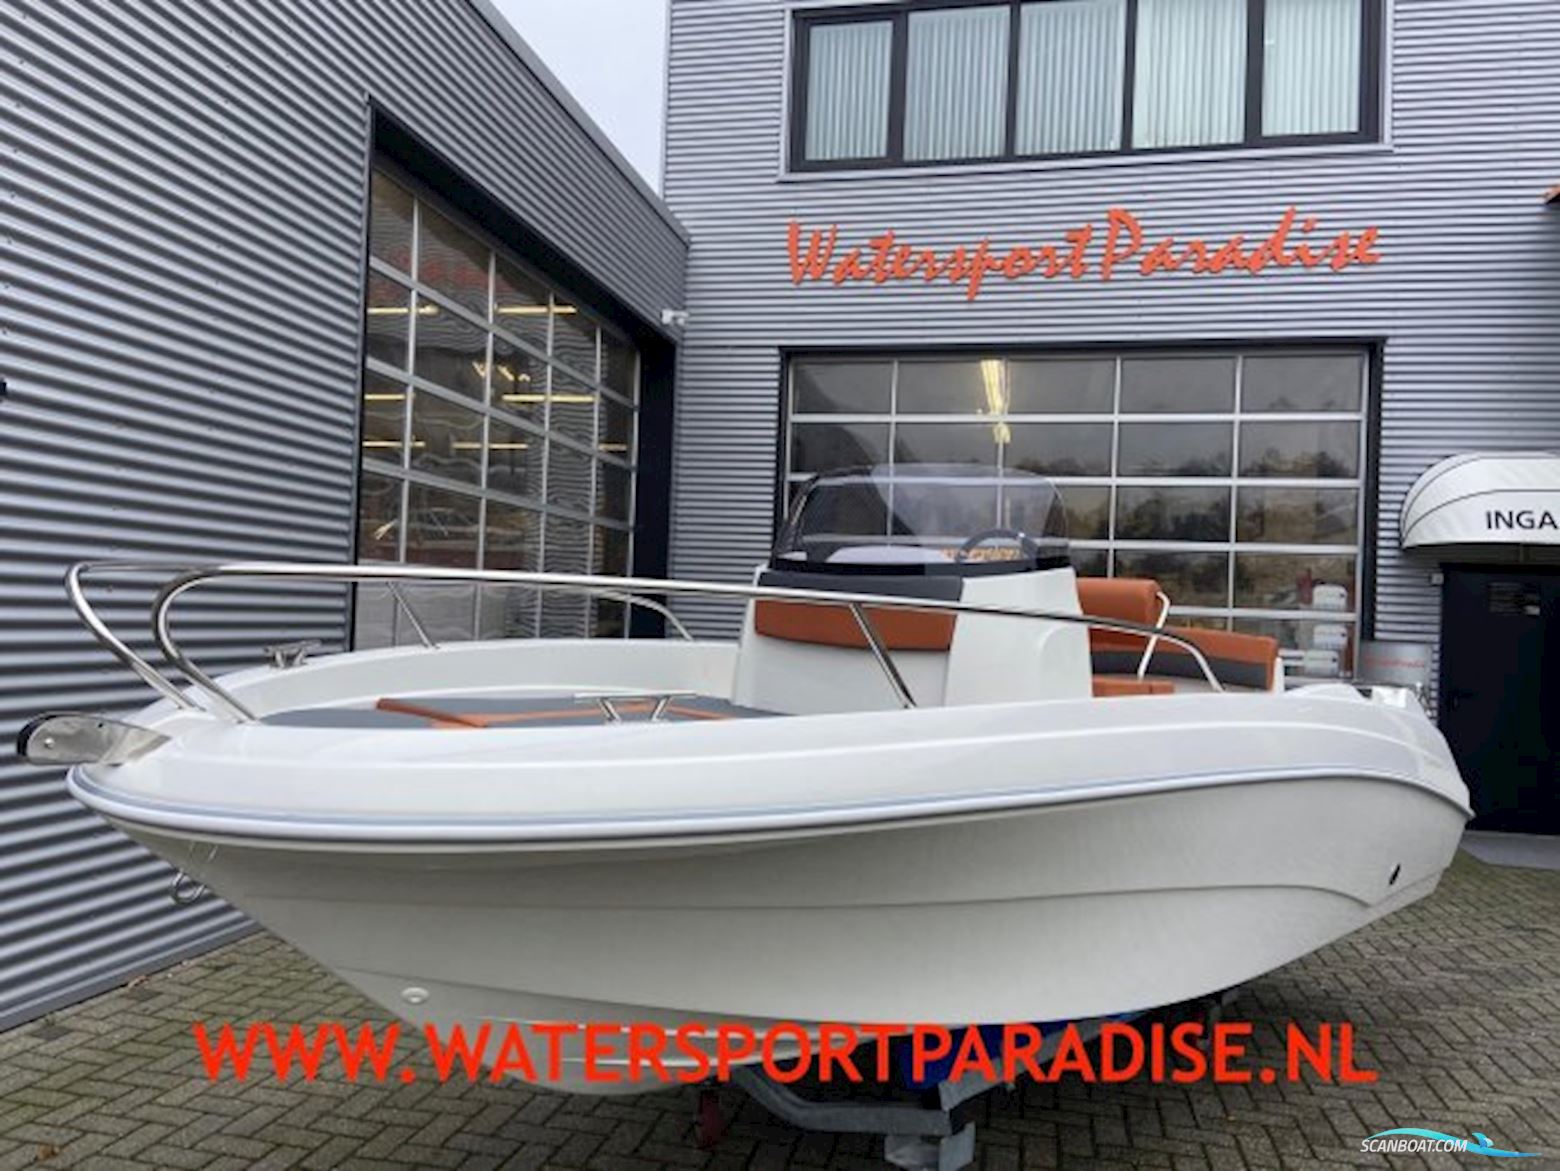 An Marin Aston 18 - New - Motor boat 2022, The Netherlands